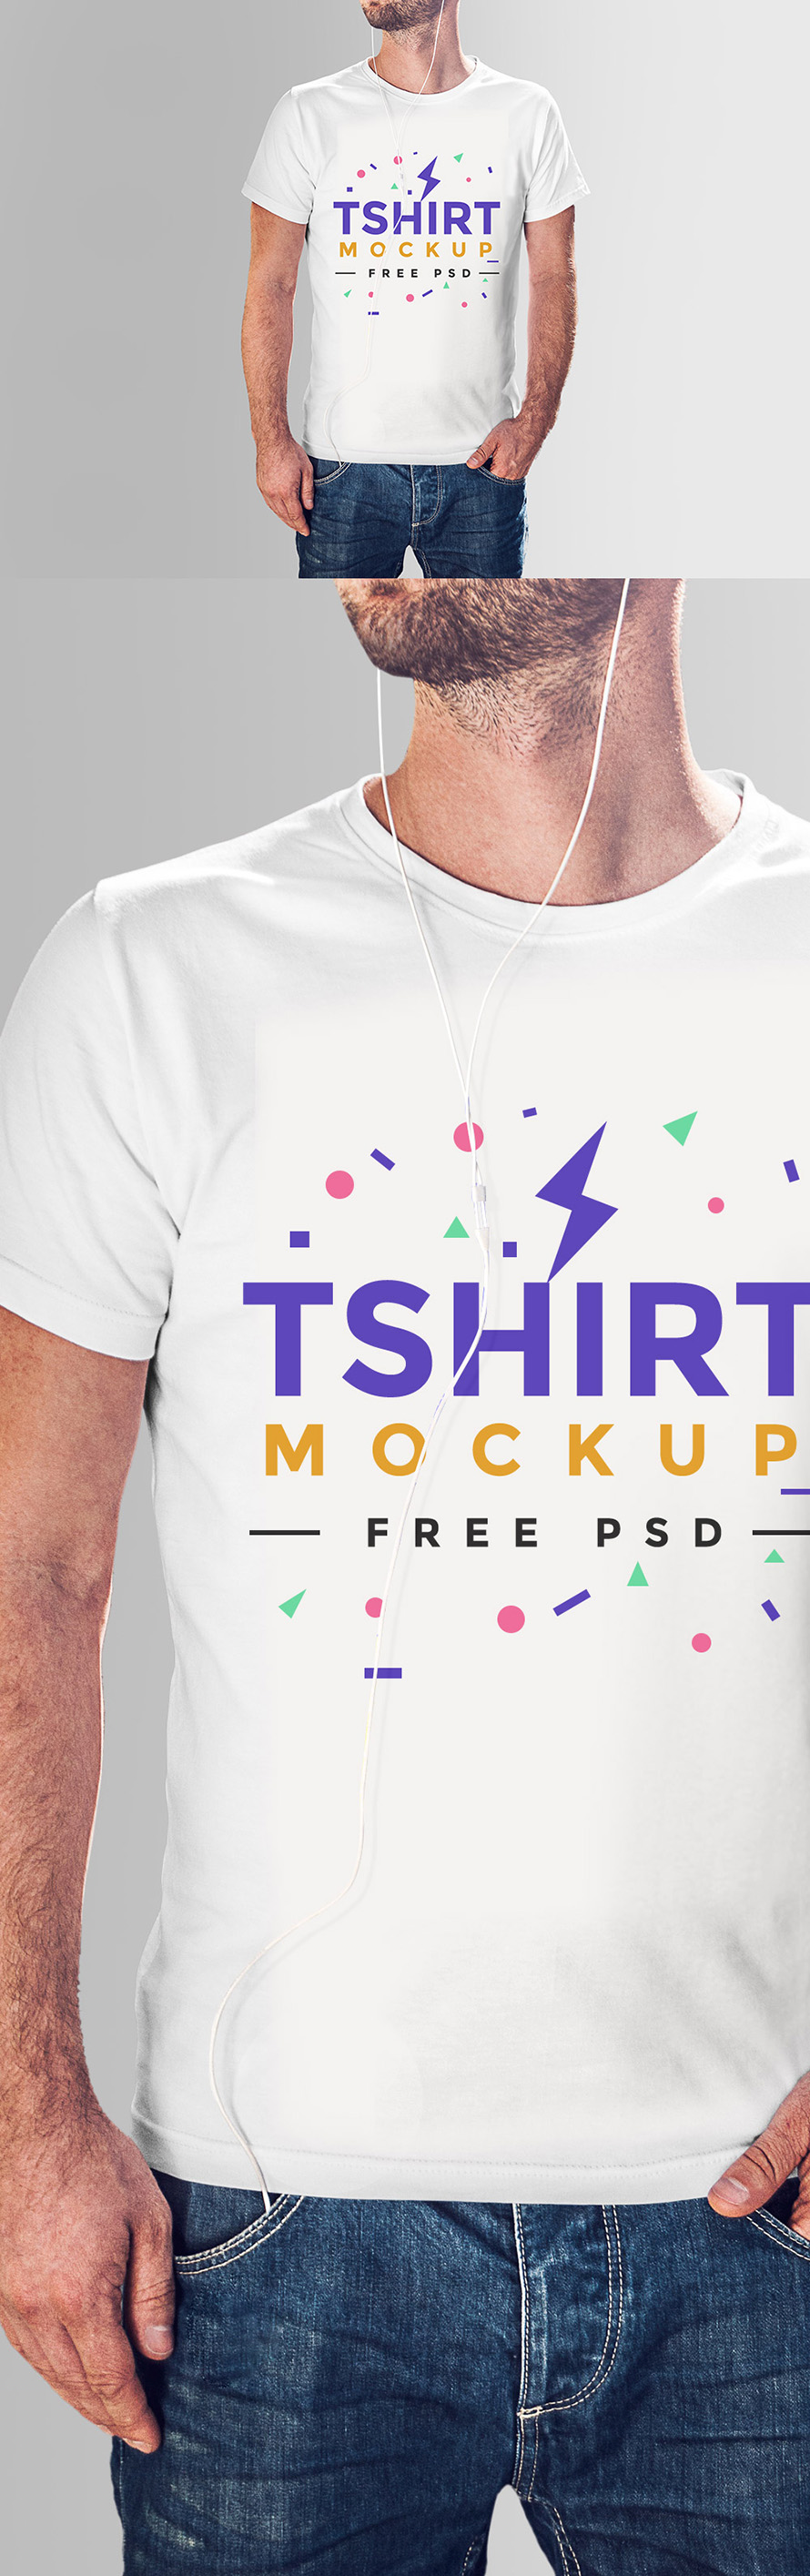 Tshirt Mockup PSD Template - Free